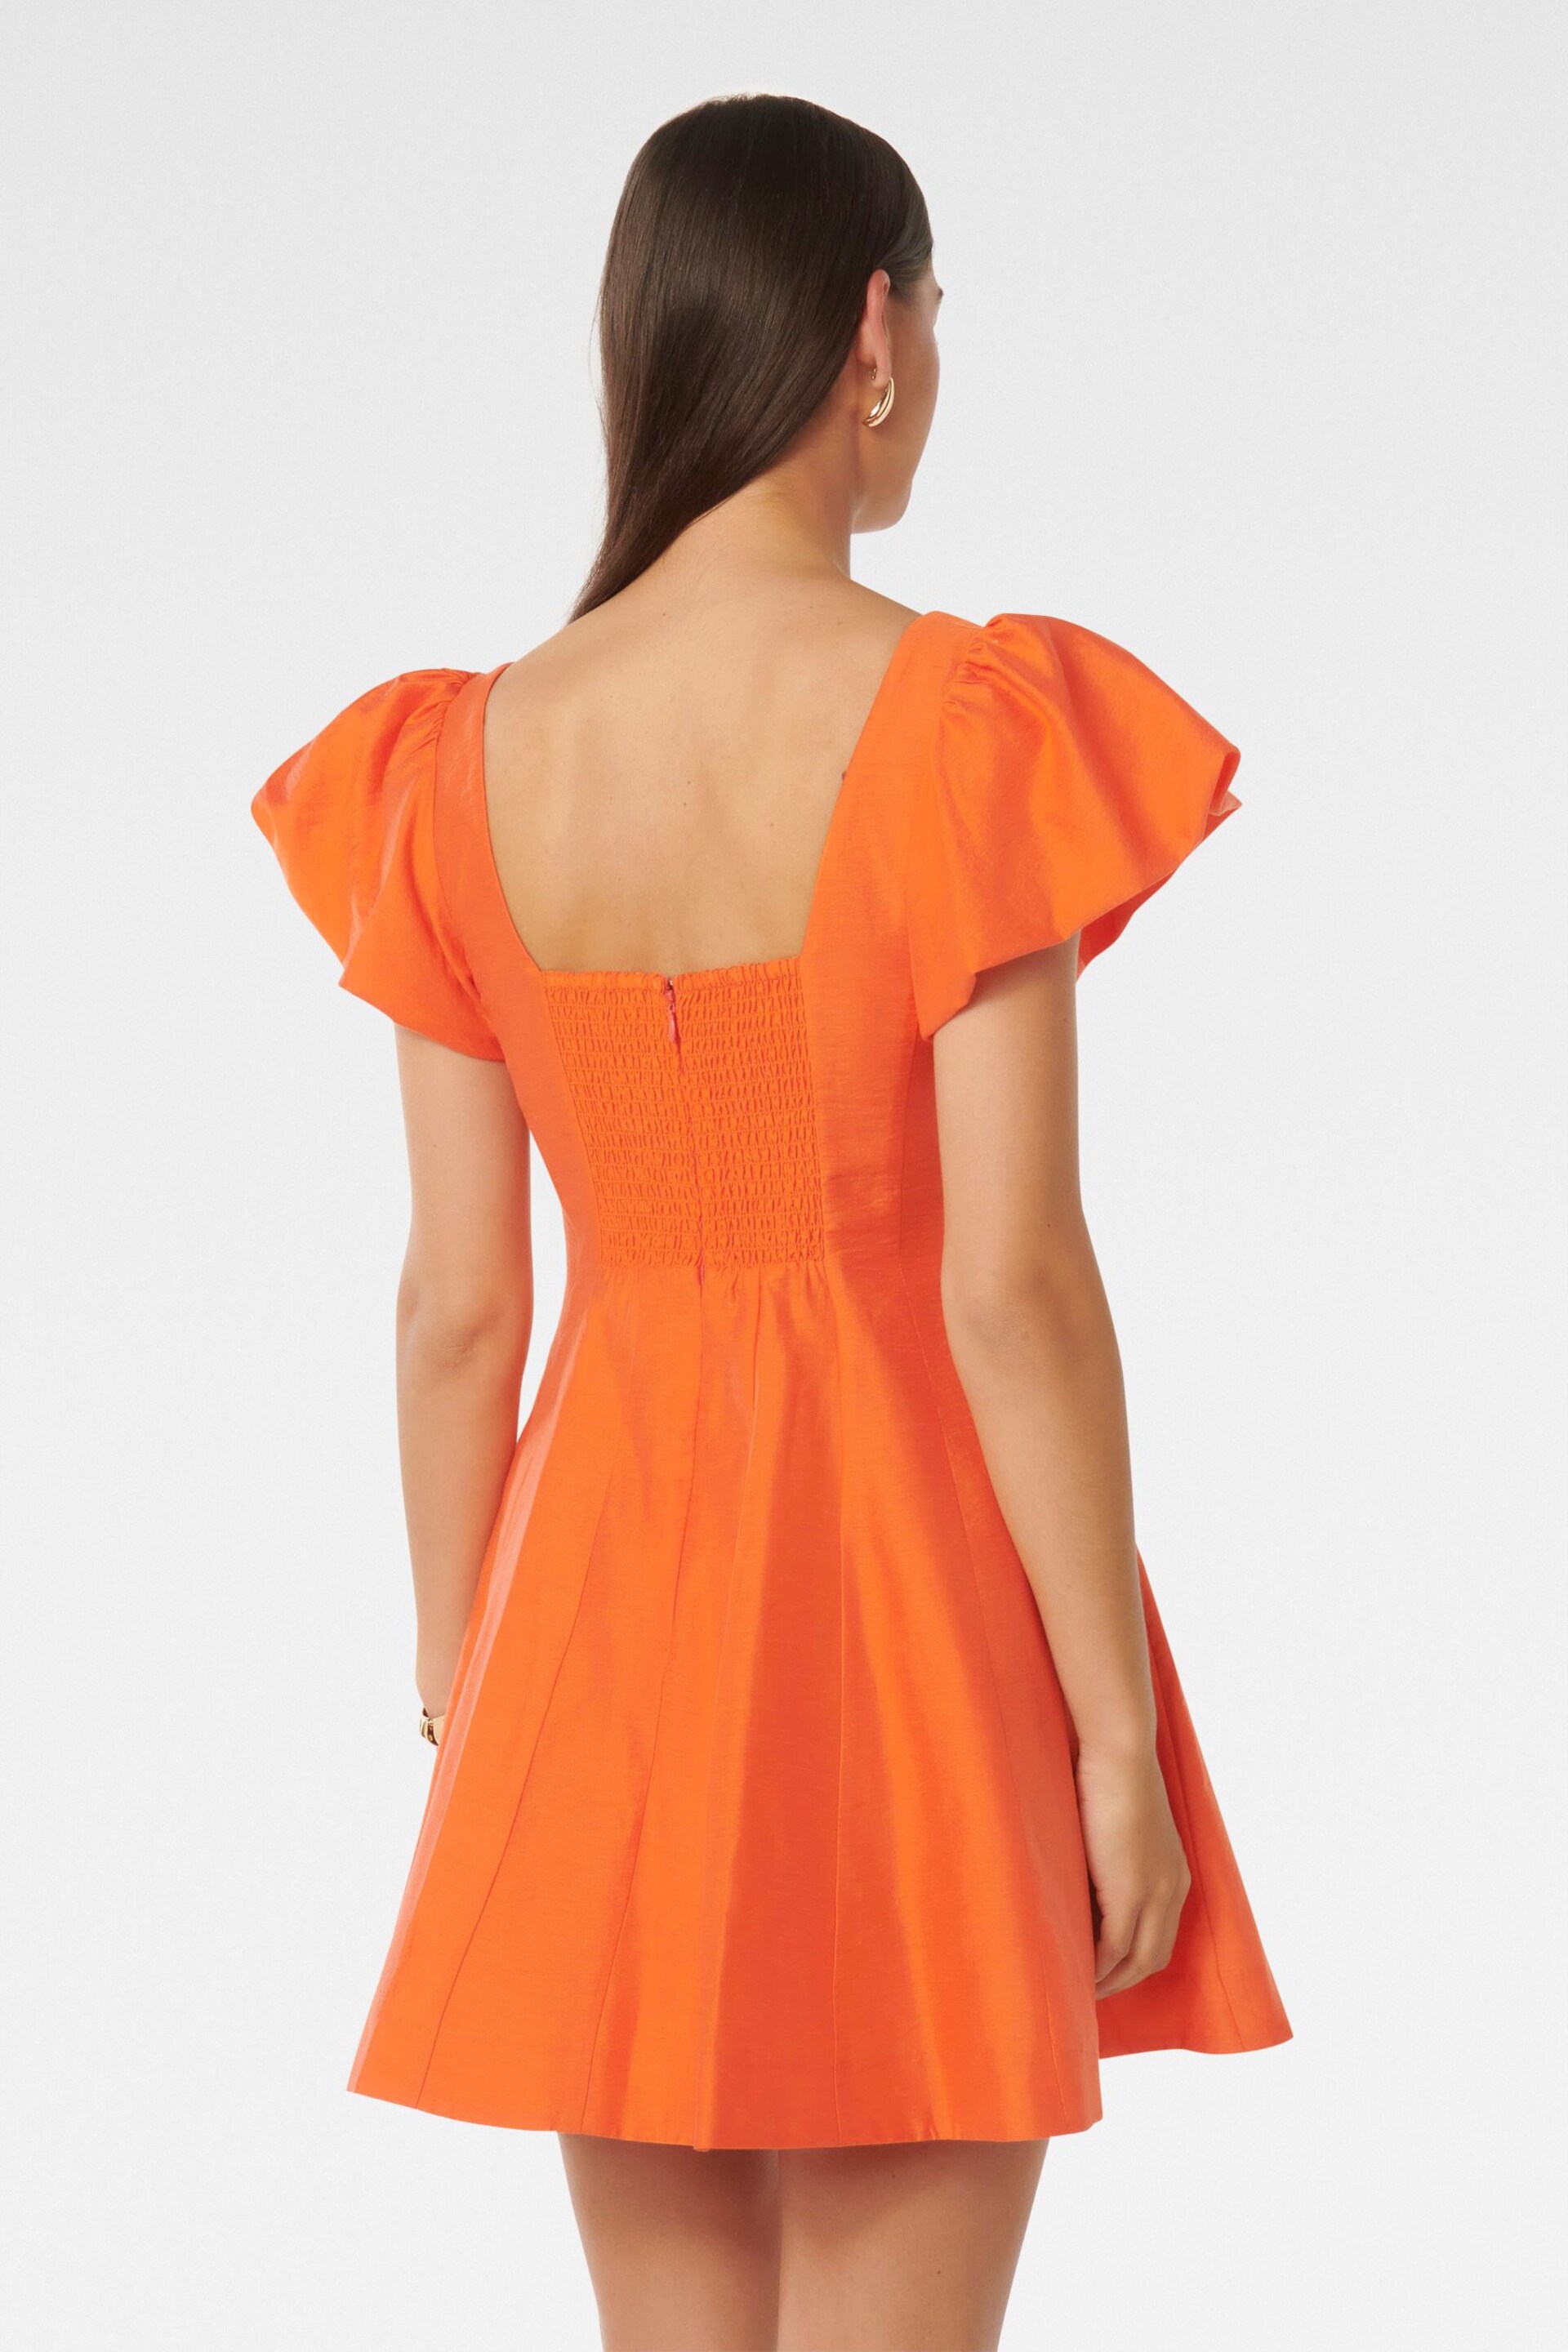 Forever New Orange Josie Square Neck Mini Dress contains Linen - Image 4 of 5